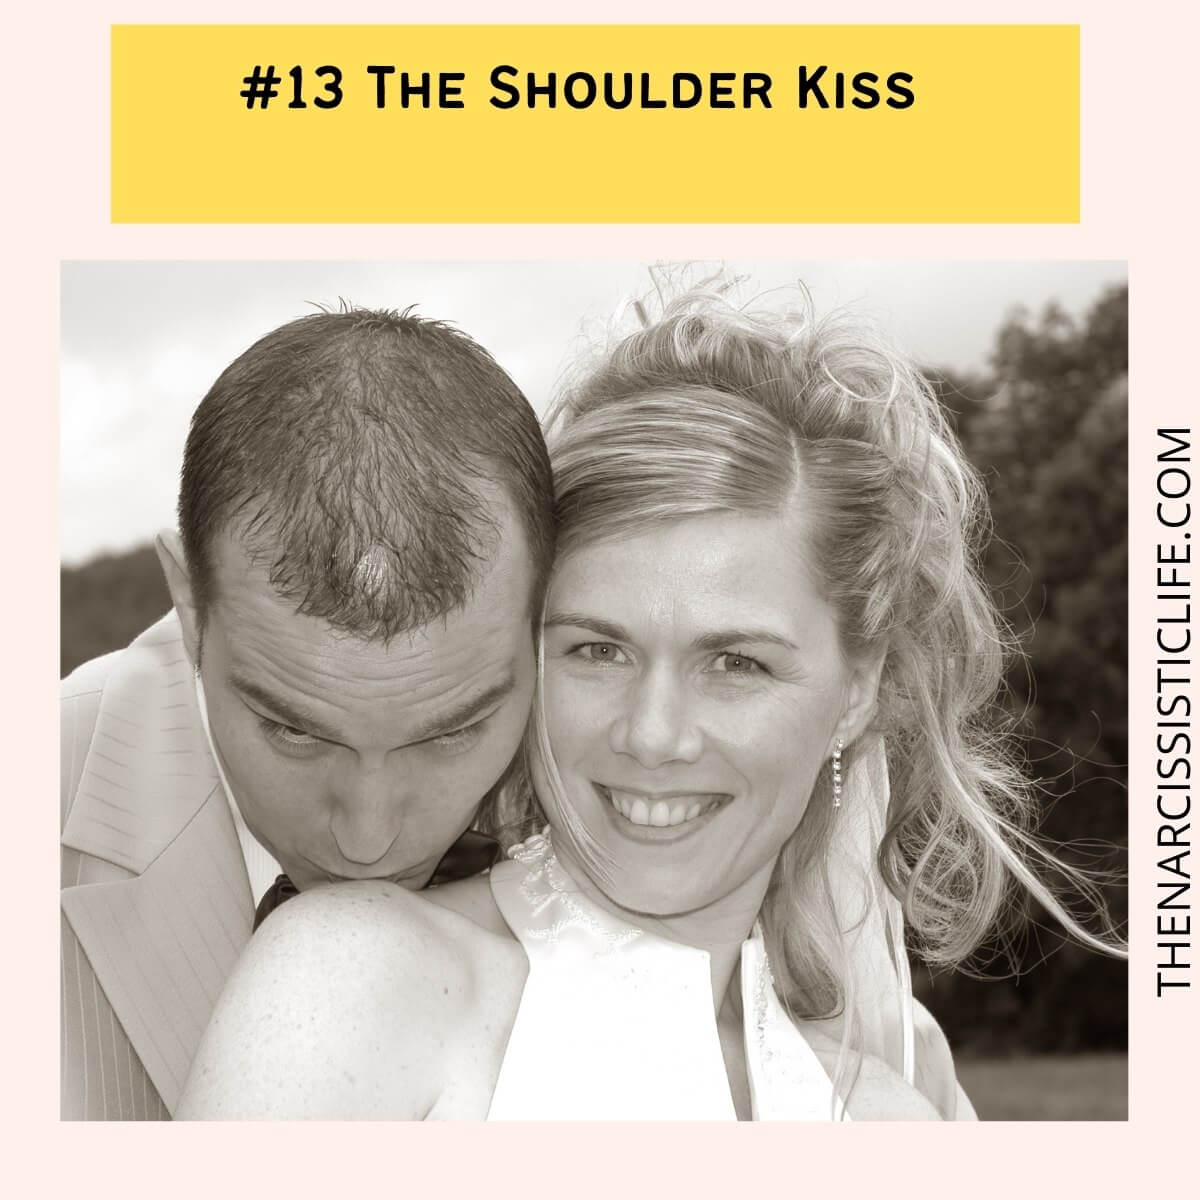 shoulder kiss meaning